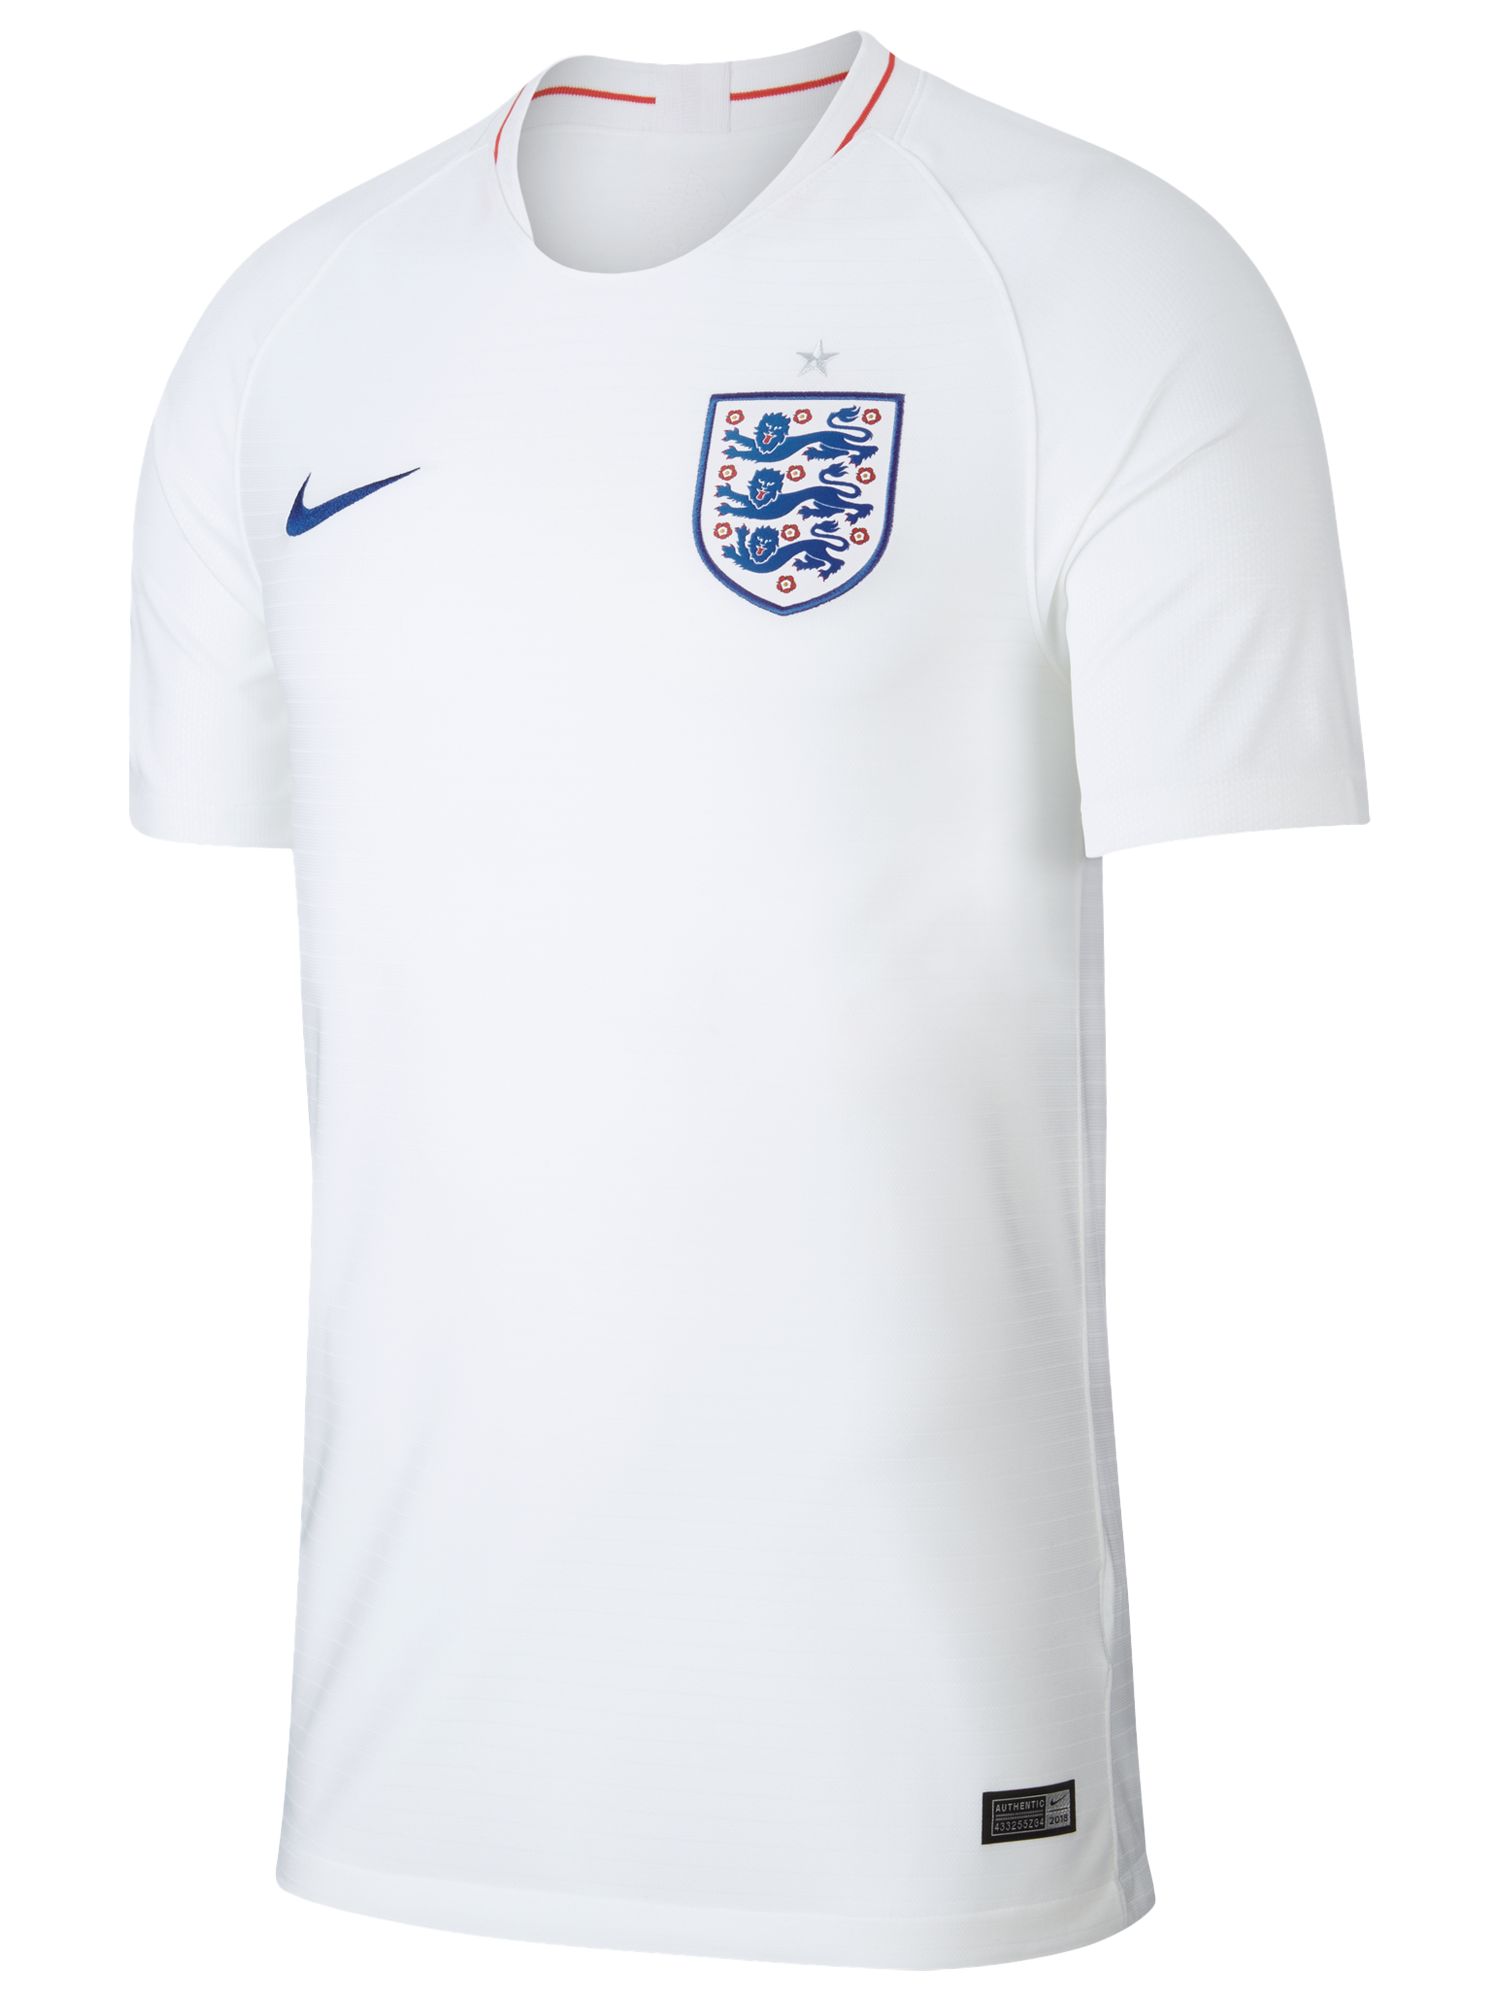 Nike 2018 England Stadium Kit Men's Football Shirt, White